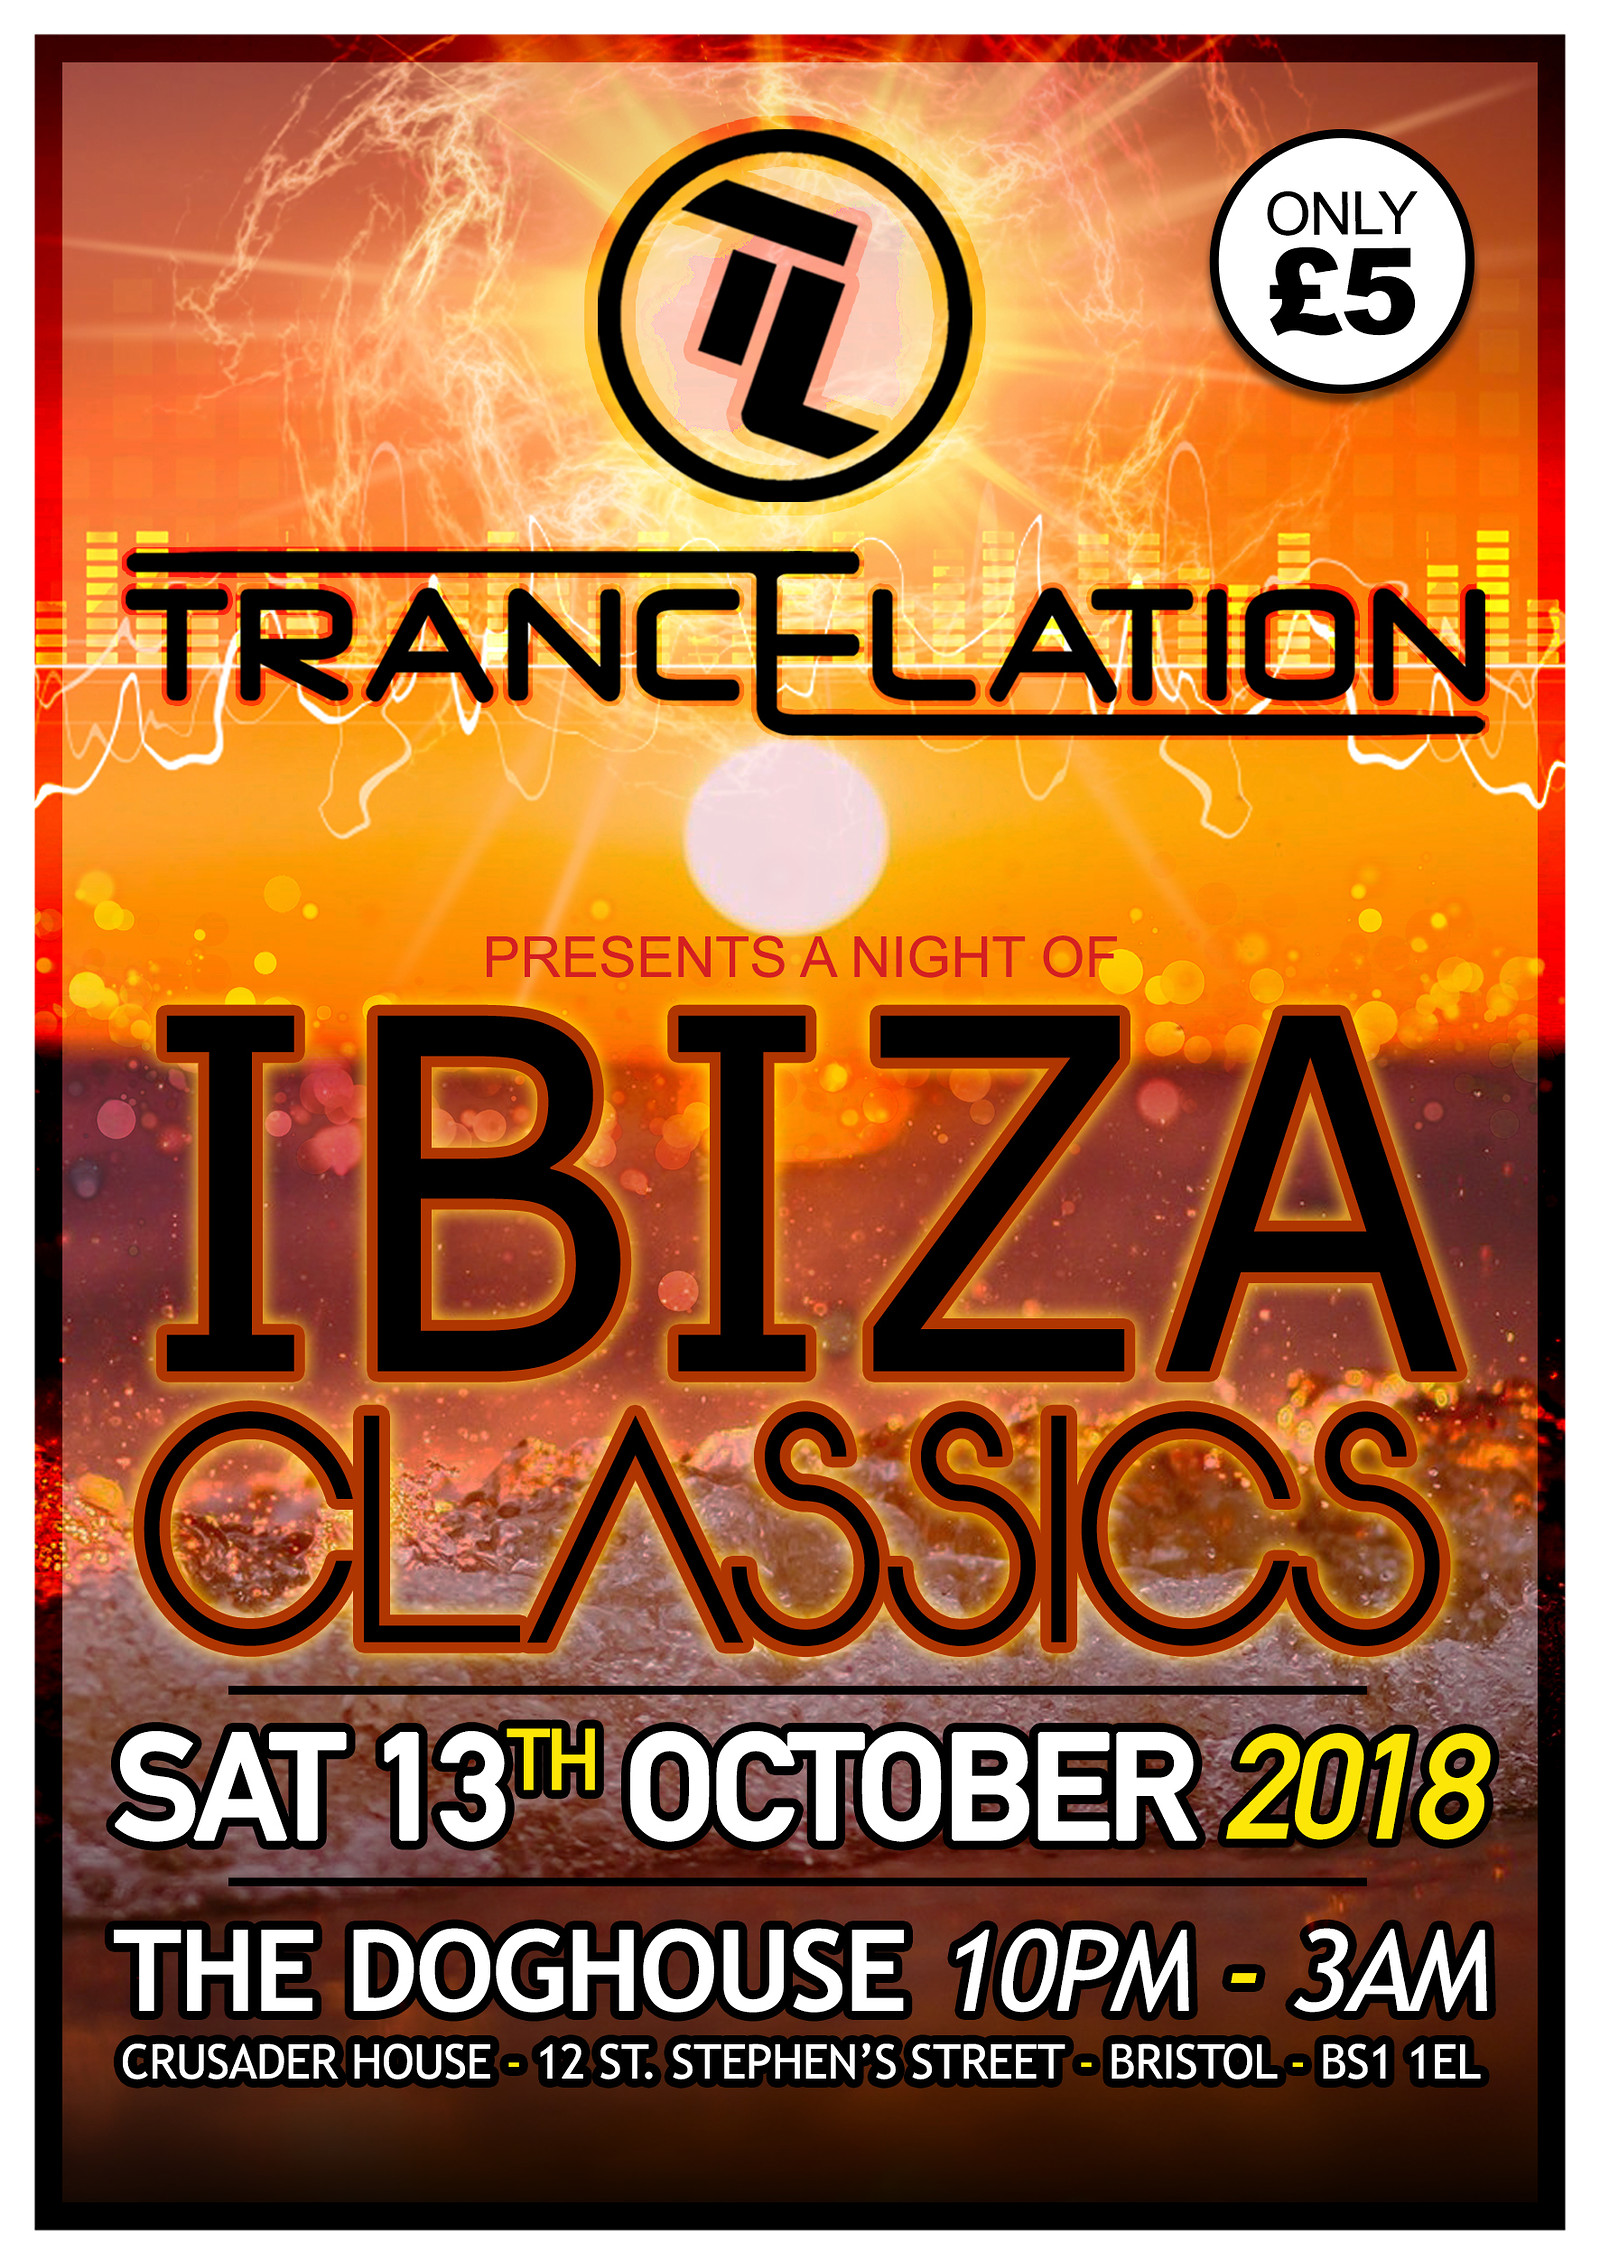 Trancelation Presents Ibiza Classics at The Doghouse